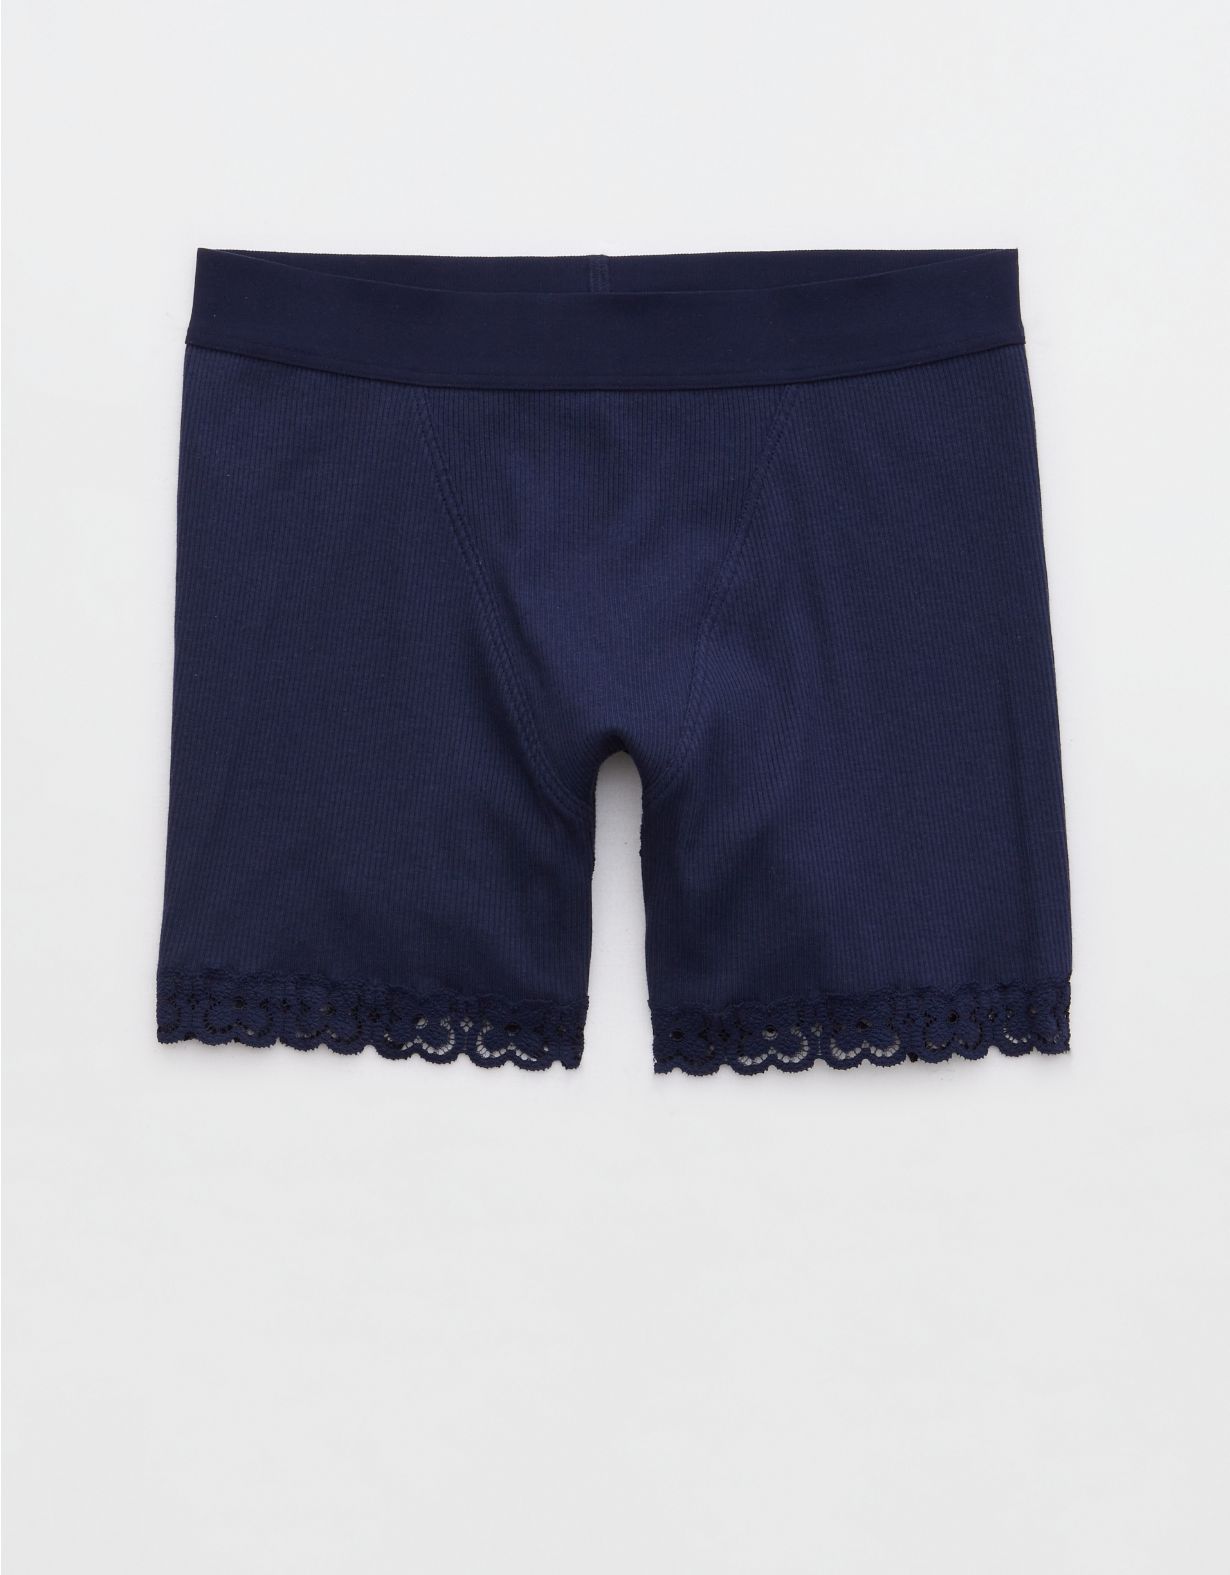 Superchill Cotton Cozy Lace Boyshort Underwear